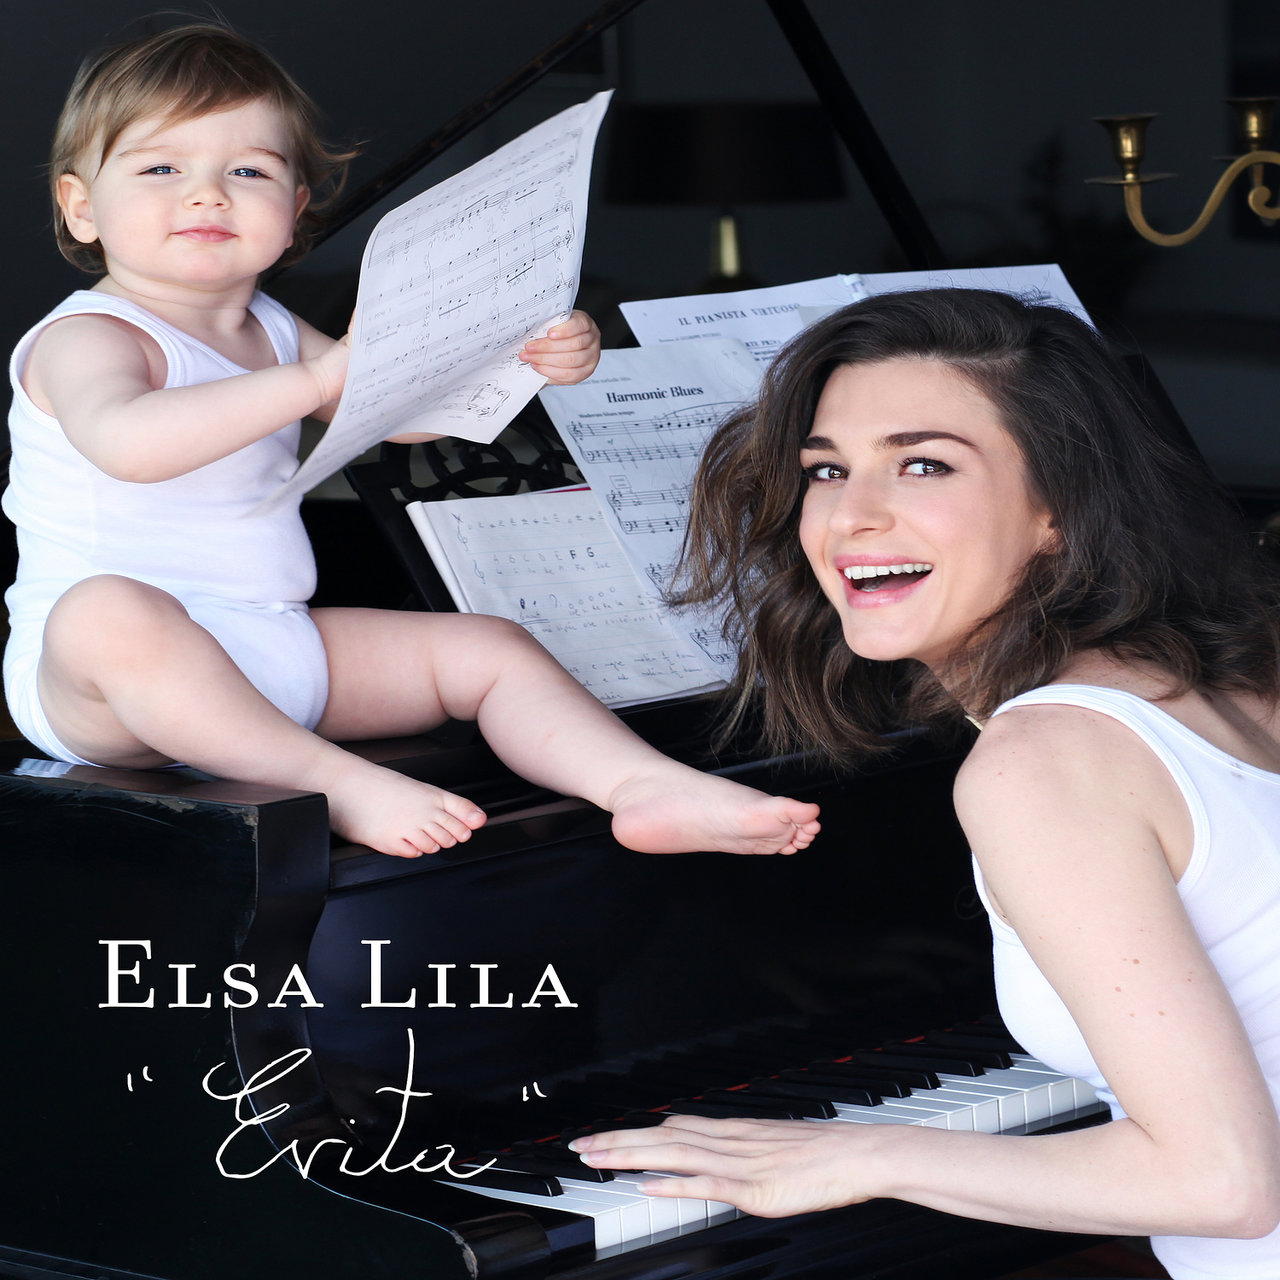 Elsa Lila Evita cover artwork